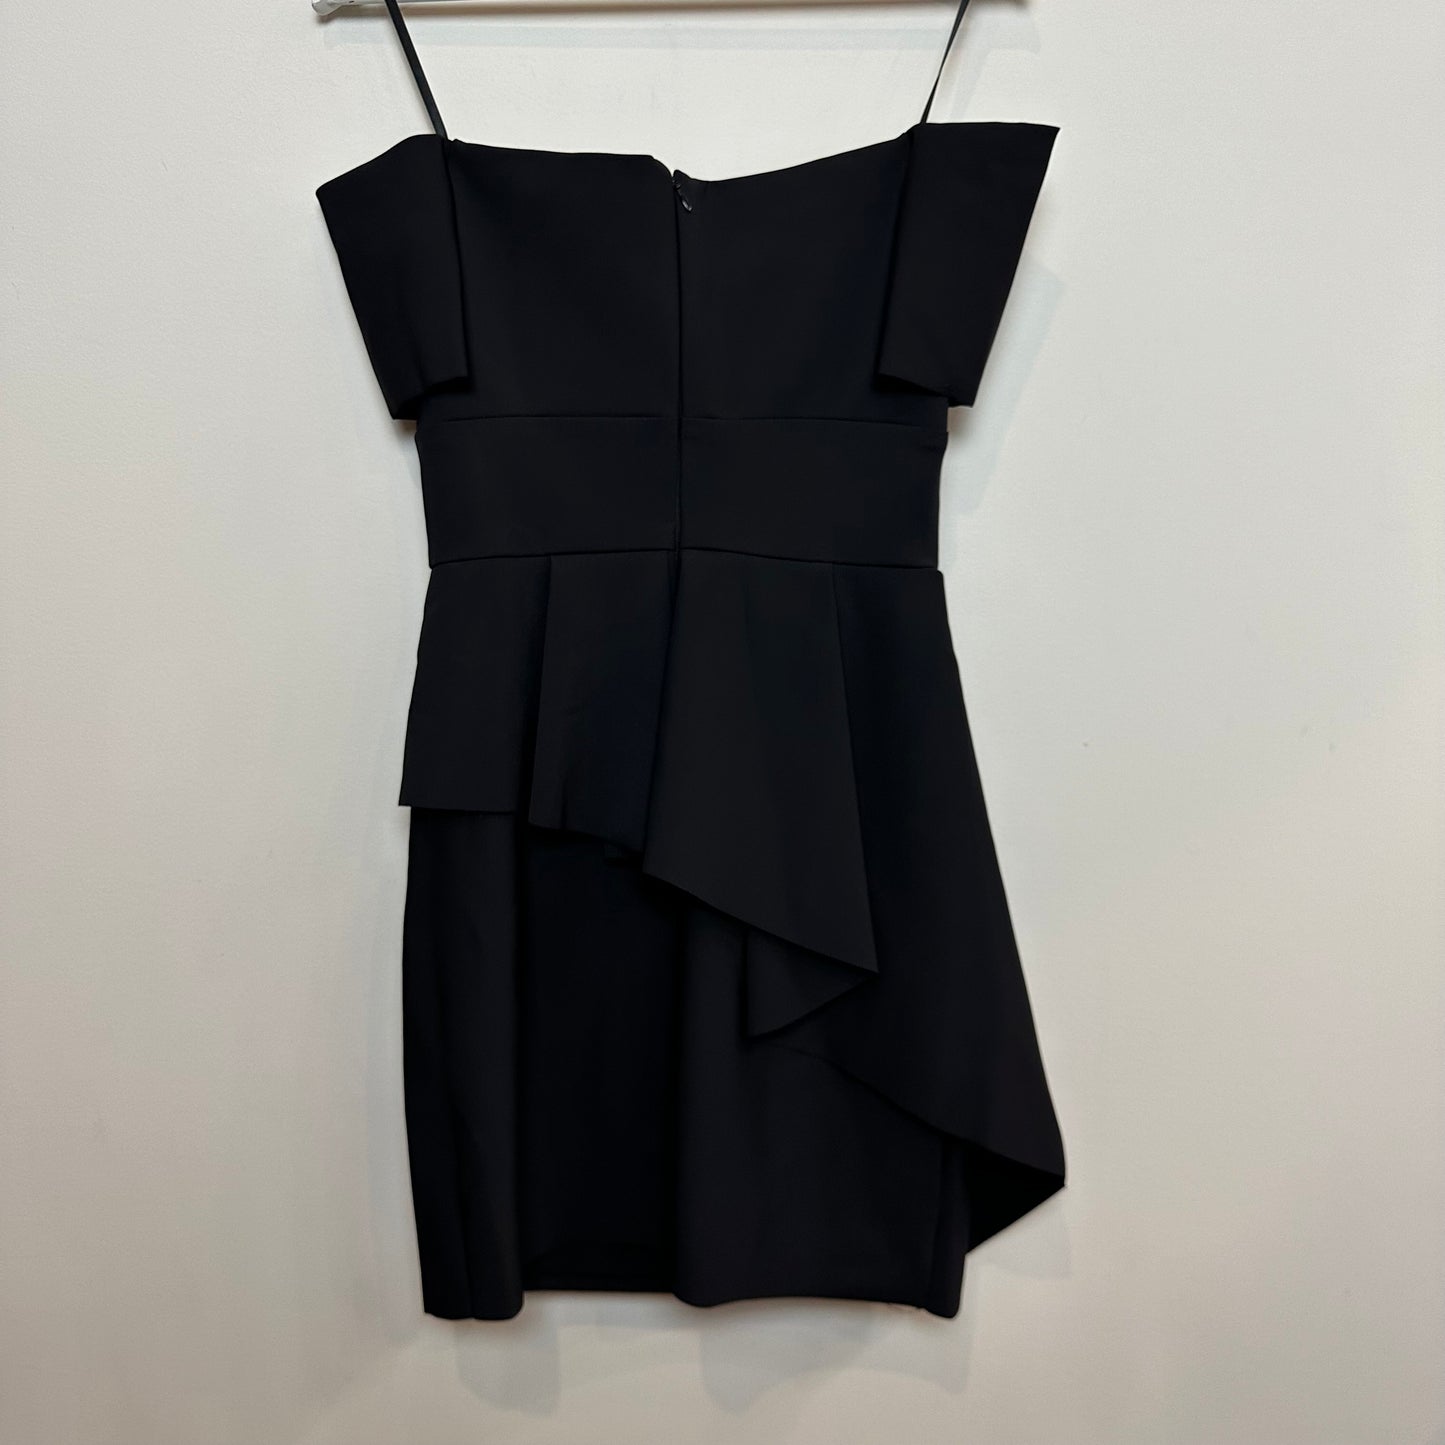 Milly Vanessa Black Dress Off-the-Shoulder Peplum Cocktail Mini 6